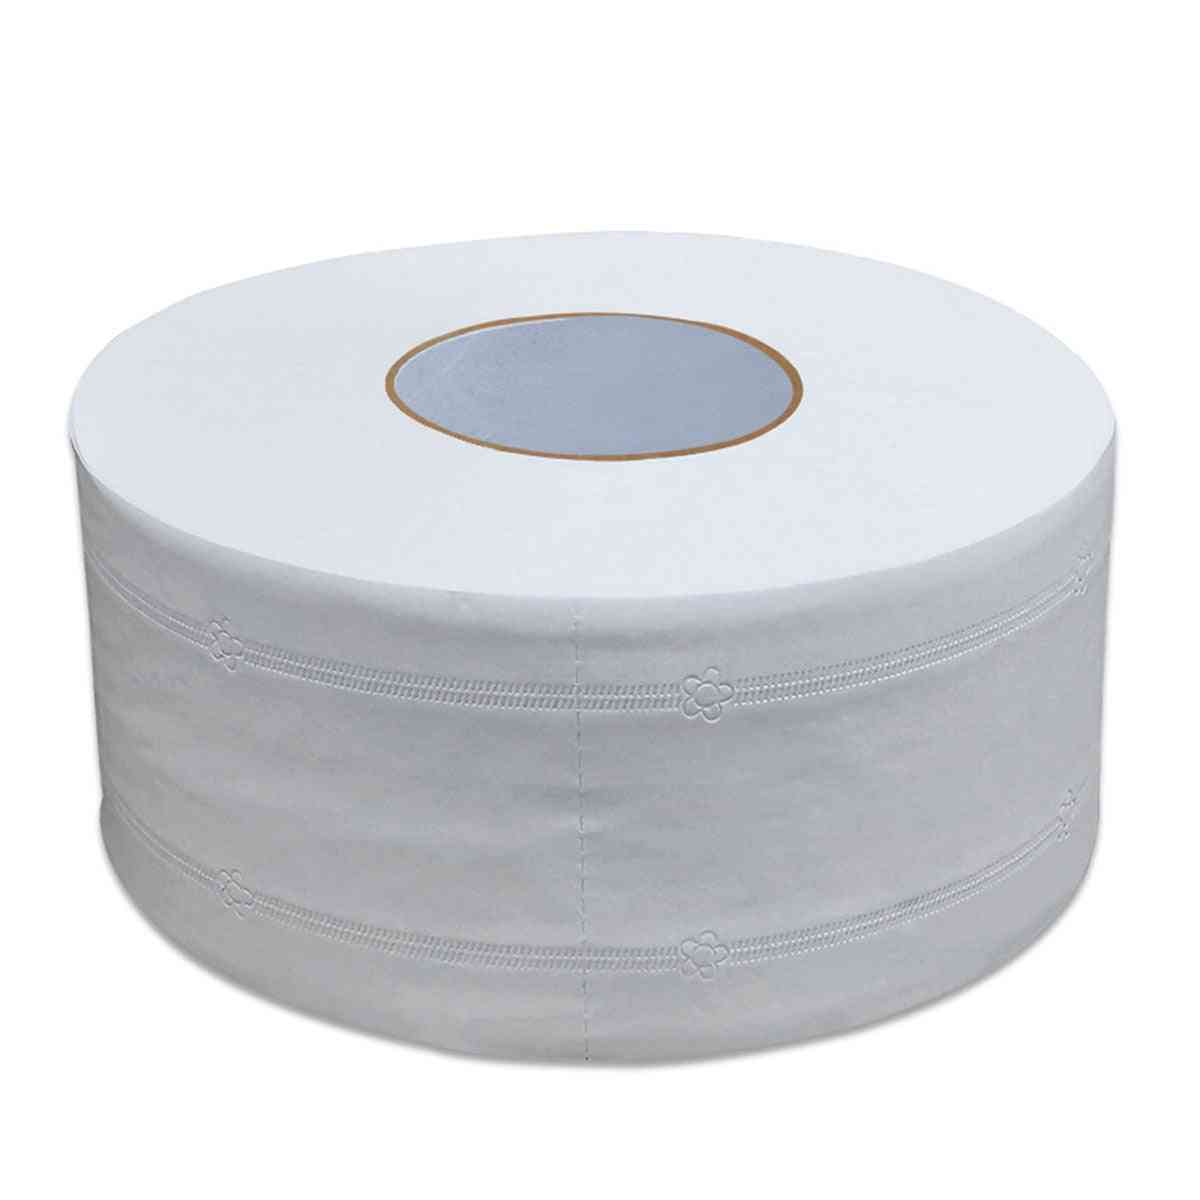 1 mekana rola drvene pulpe - toaletni papir s 4 sloja